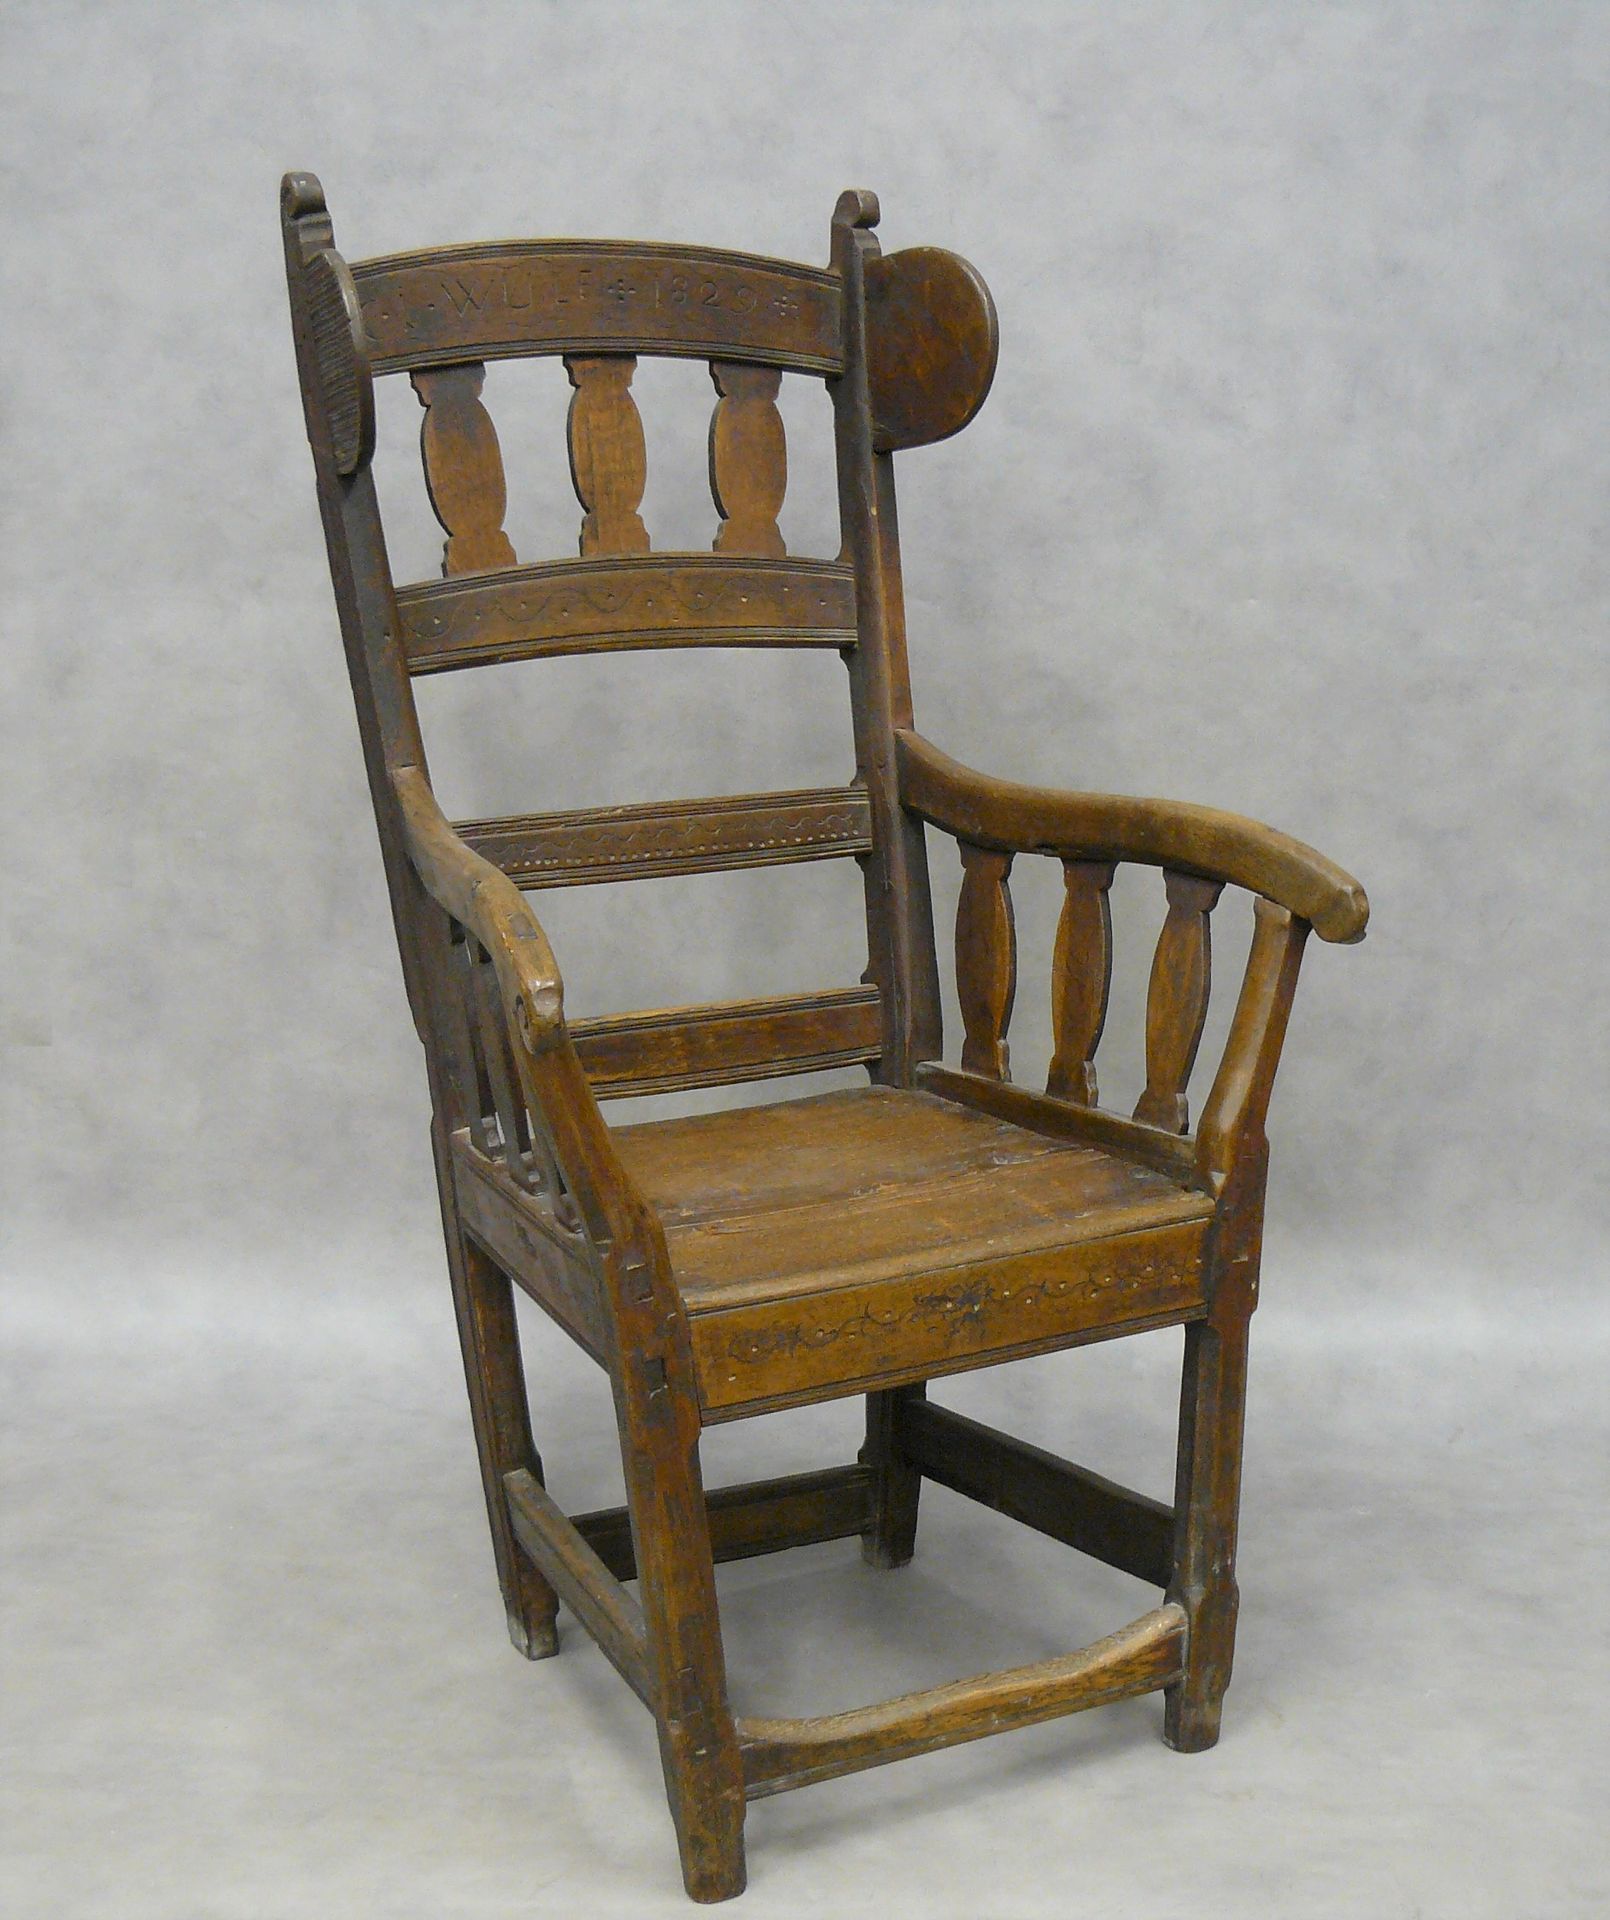 Null 一把天然木制的带耳朵的扶手椅, 伸展的手臂和背部标有：C. I Wulf和1829年的日期 - 高117，宽66厘米 - 深59.5厘米